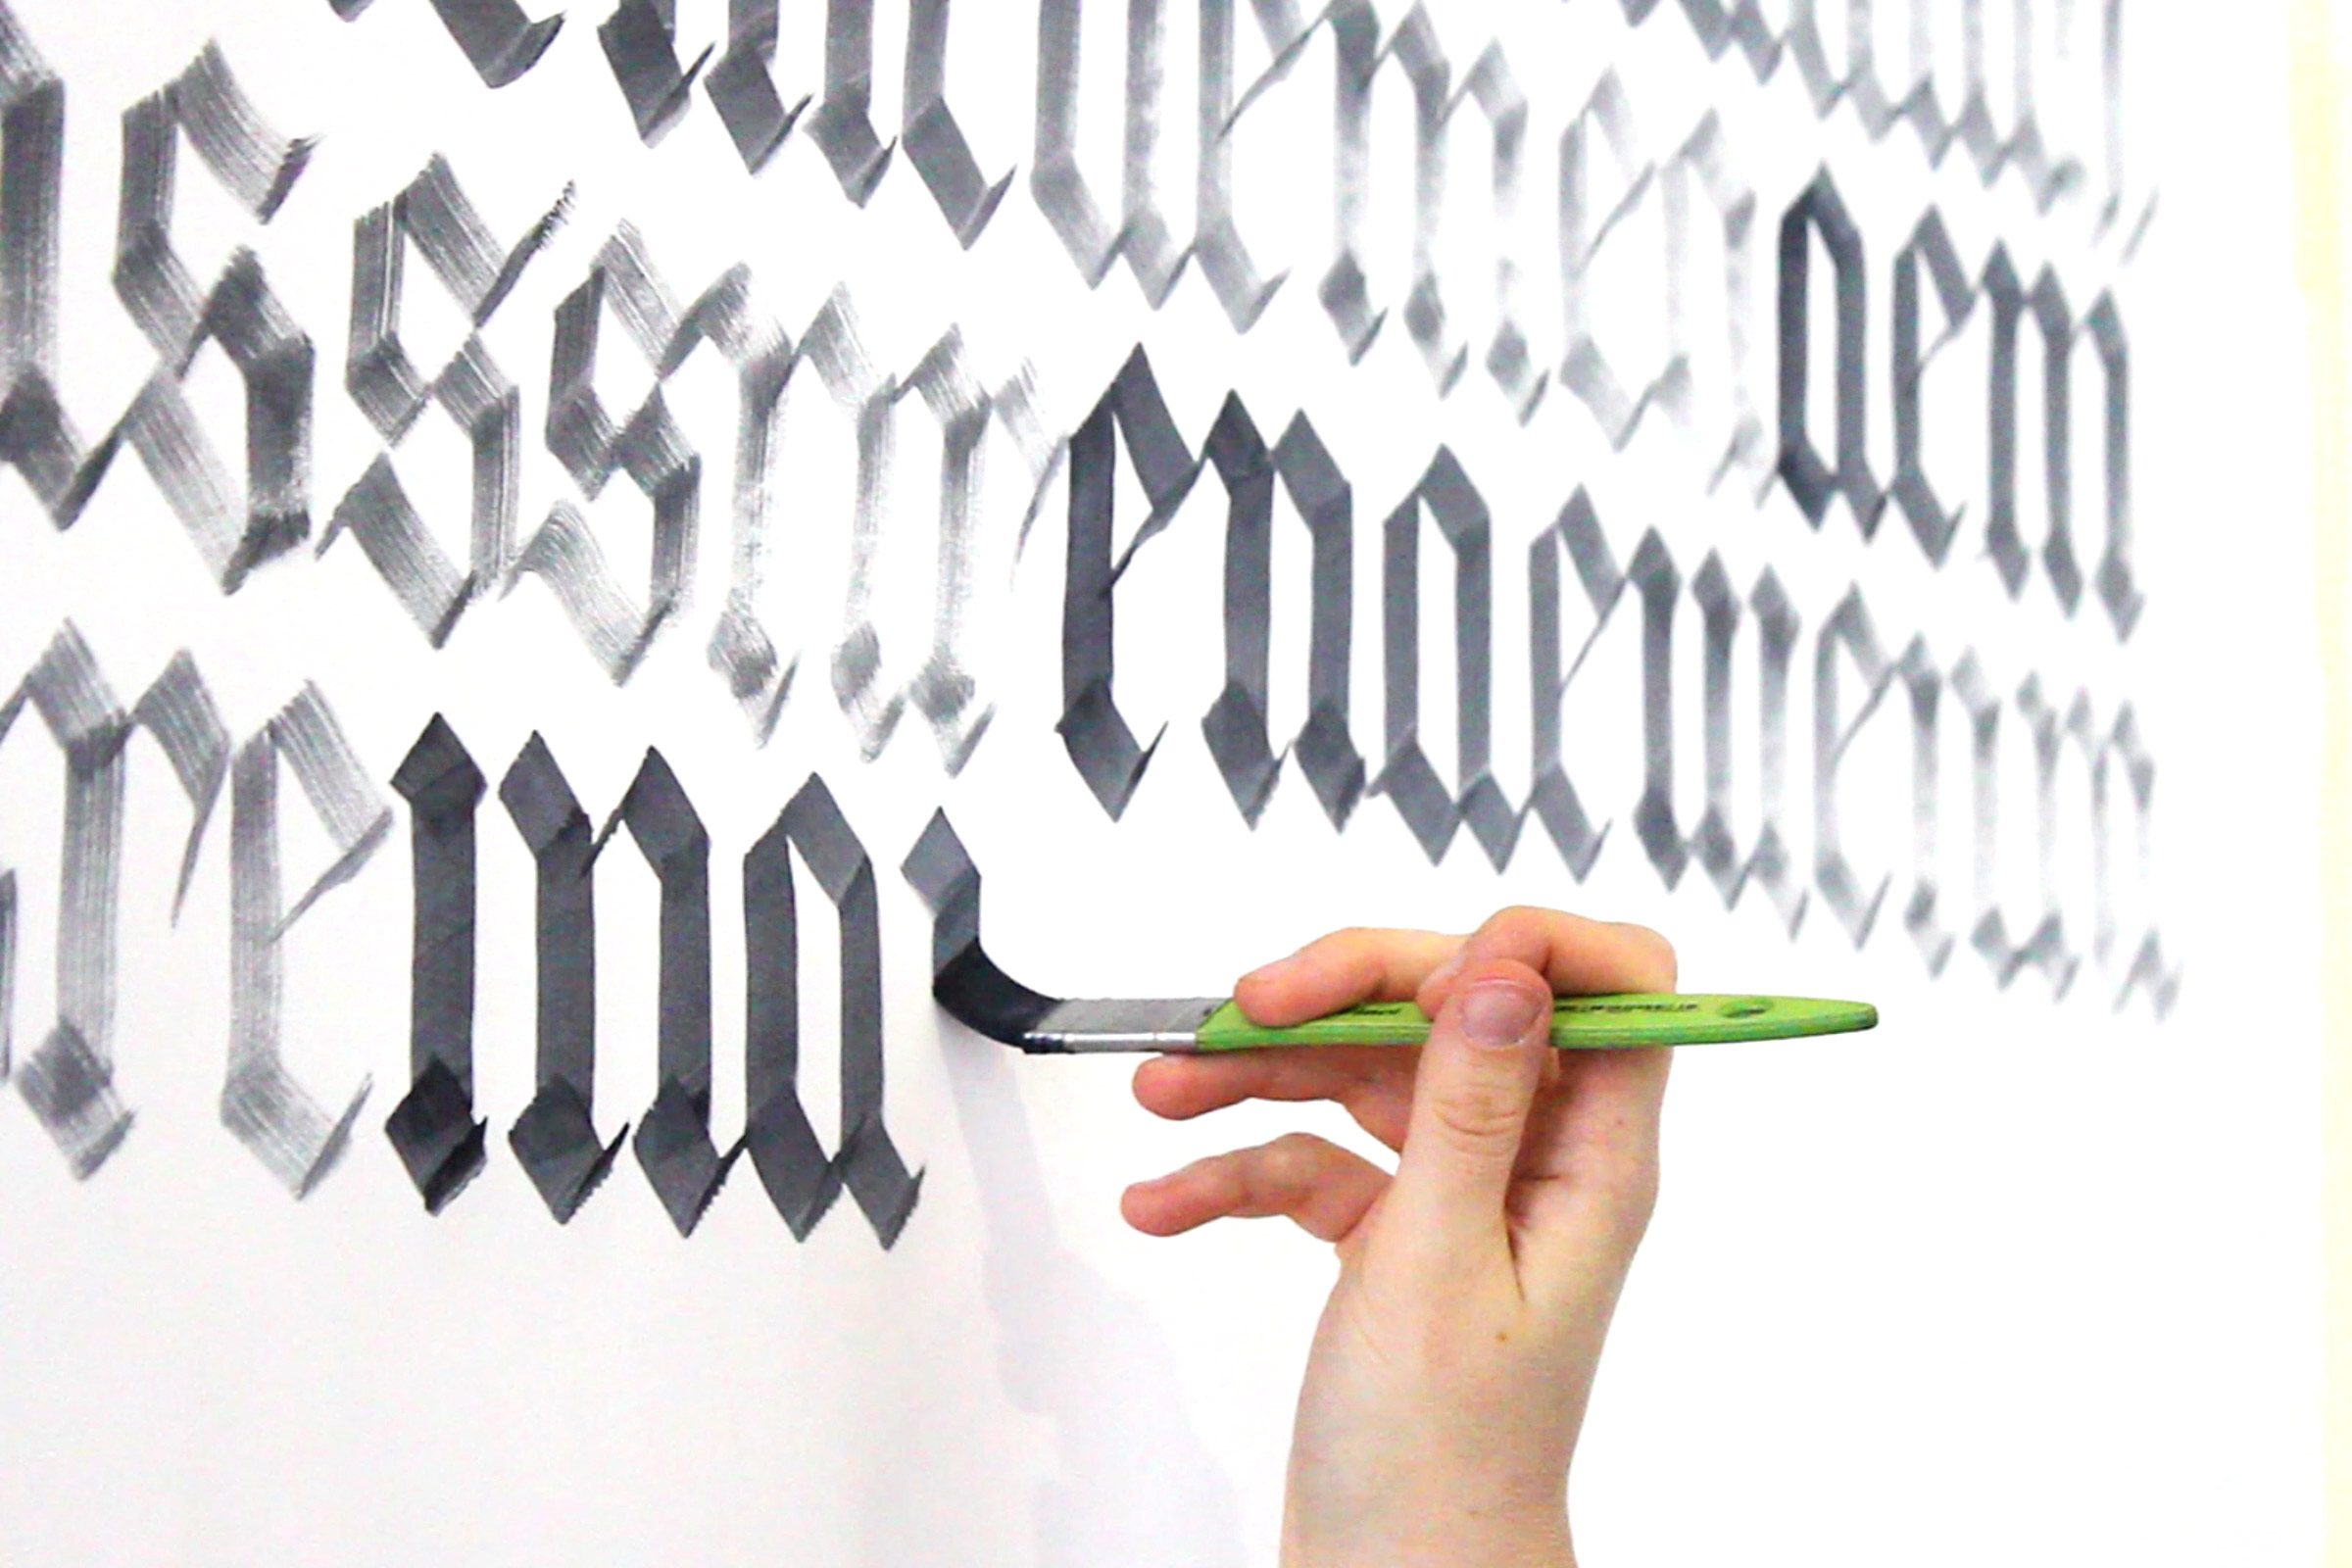 Merle Michaelis / Lettering & Typografie Kalligrafie und Kampfkunst